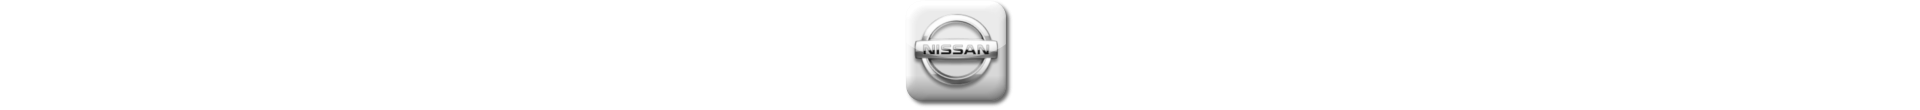 Boitier additionnel Nissan Essence Evolussem